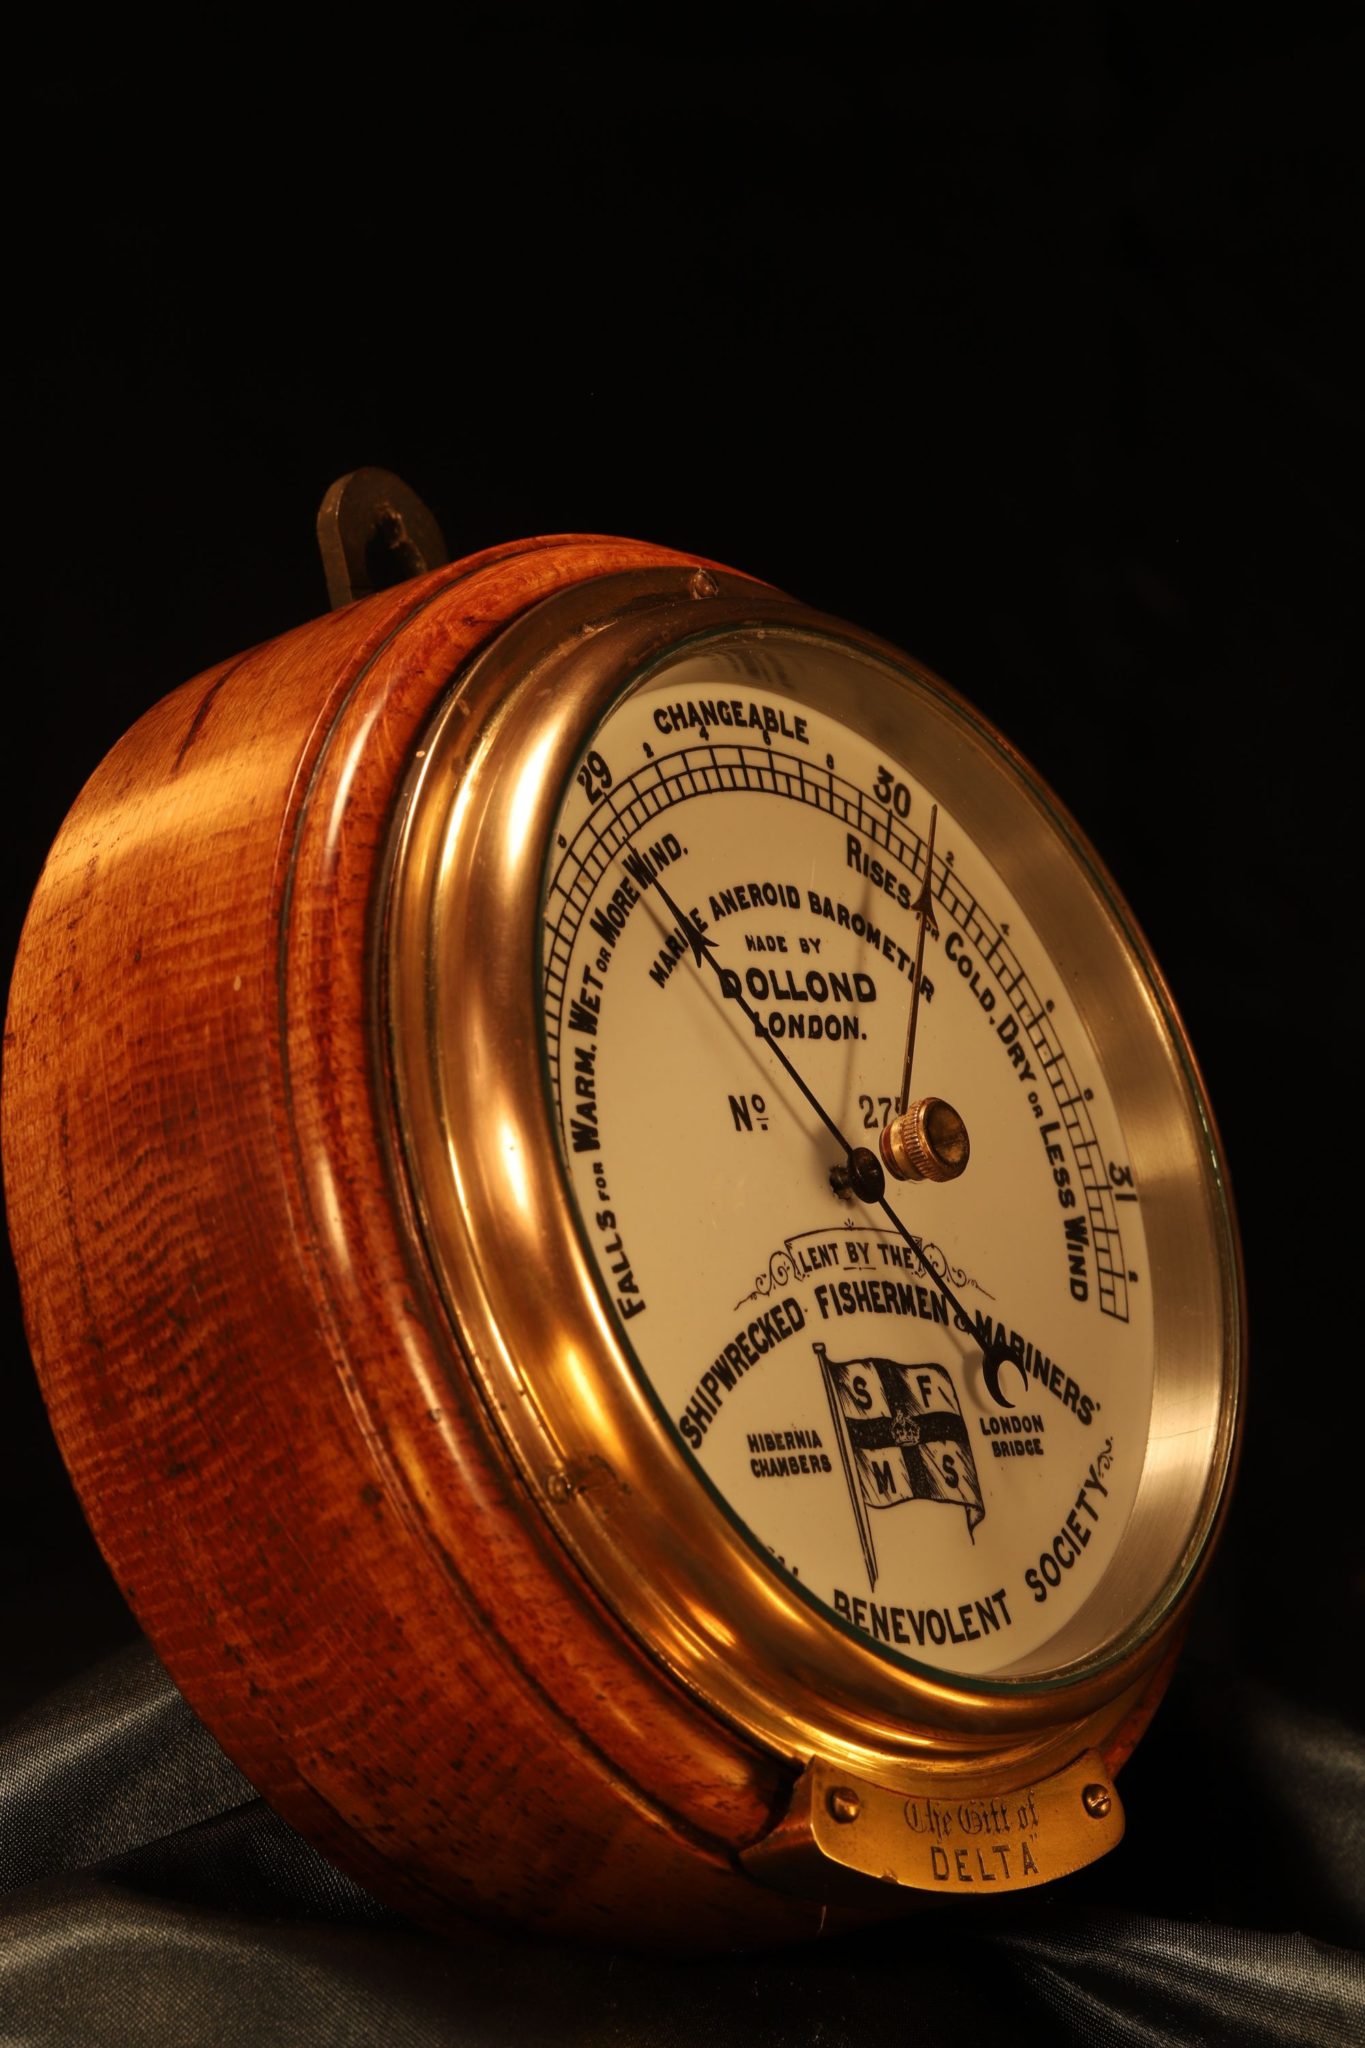 Image of Dollond Shipwrecked Fishermen & Mariners Society Marine Barometer No 275 c1882